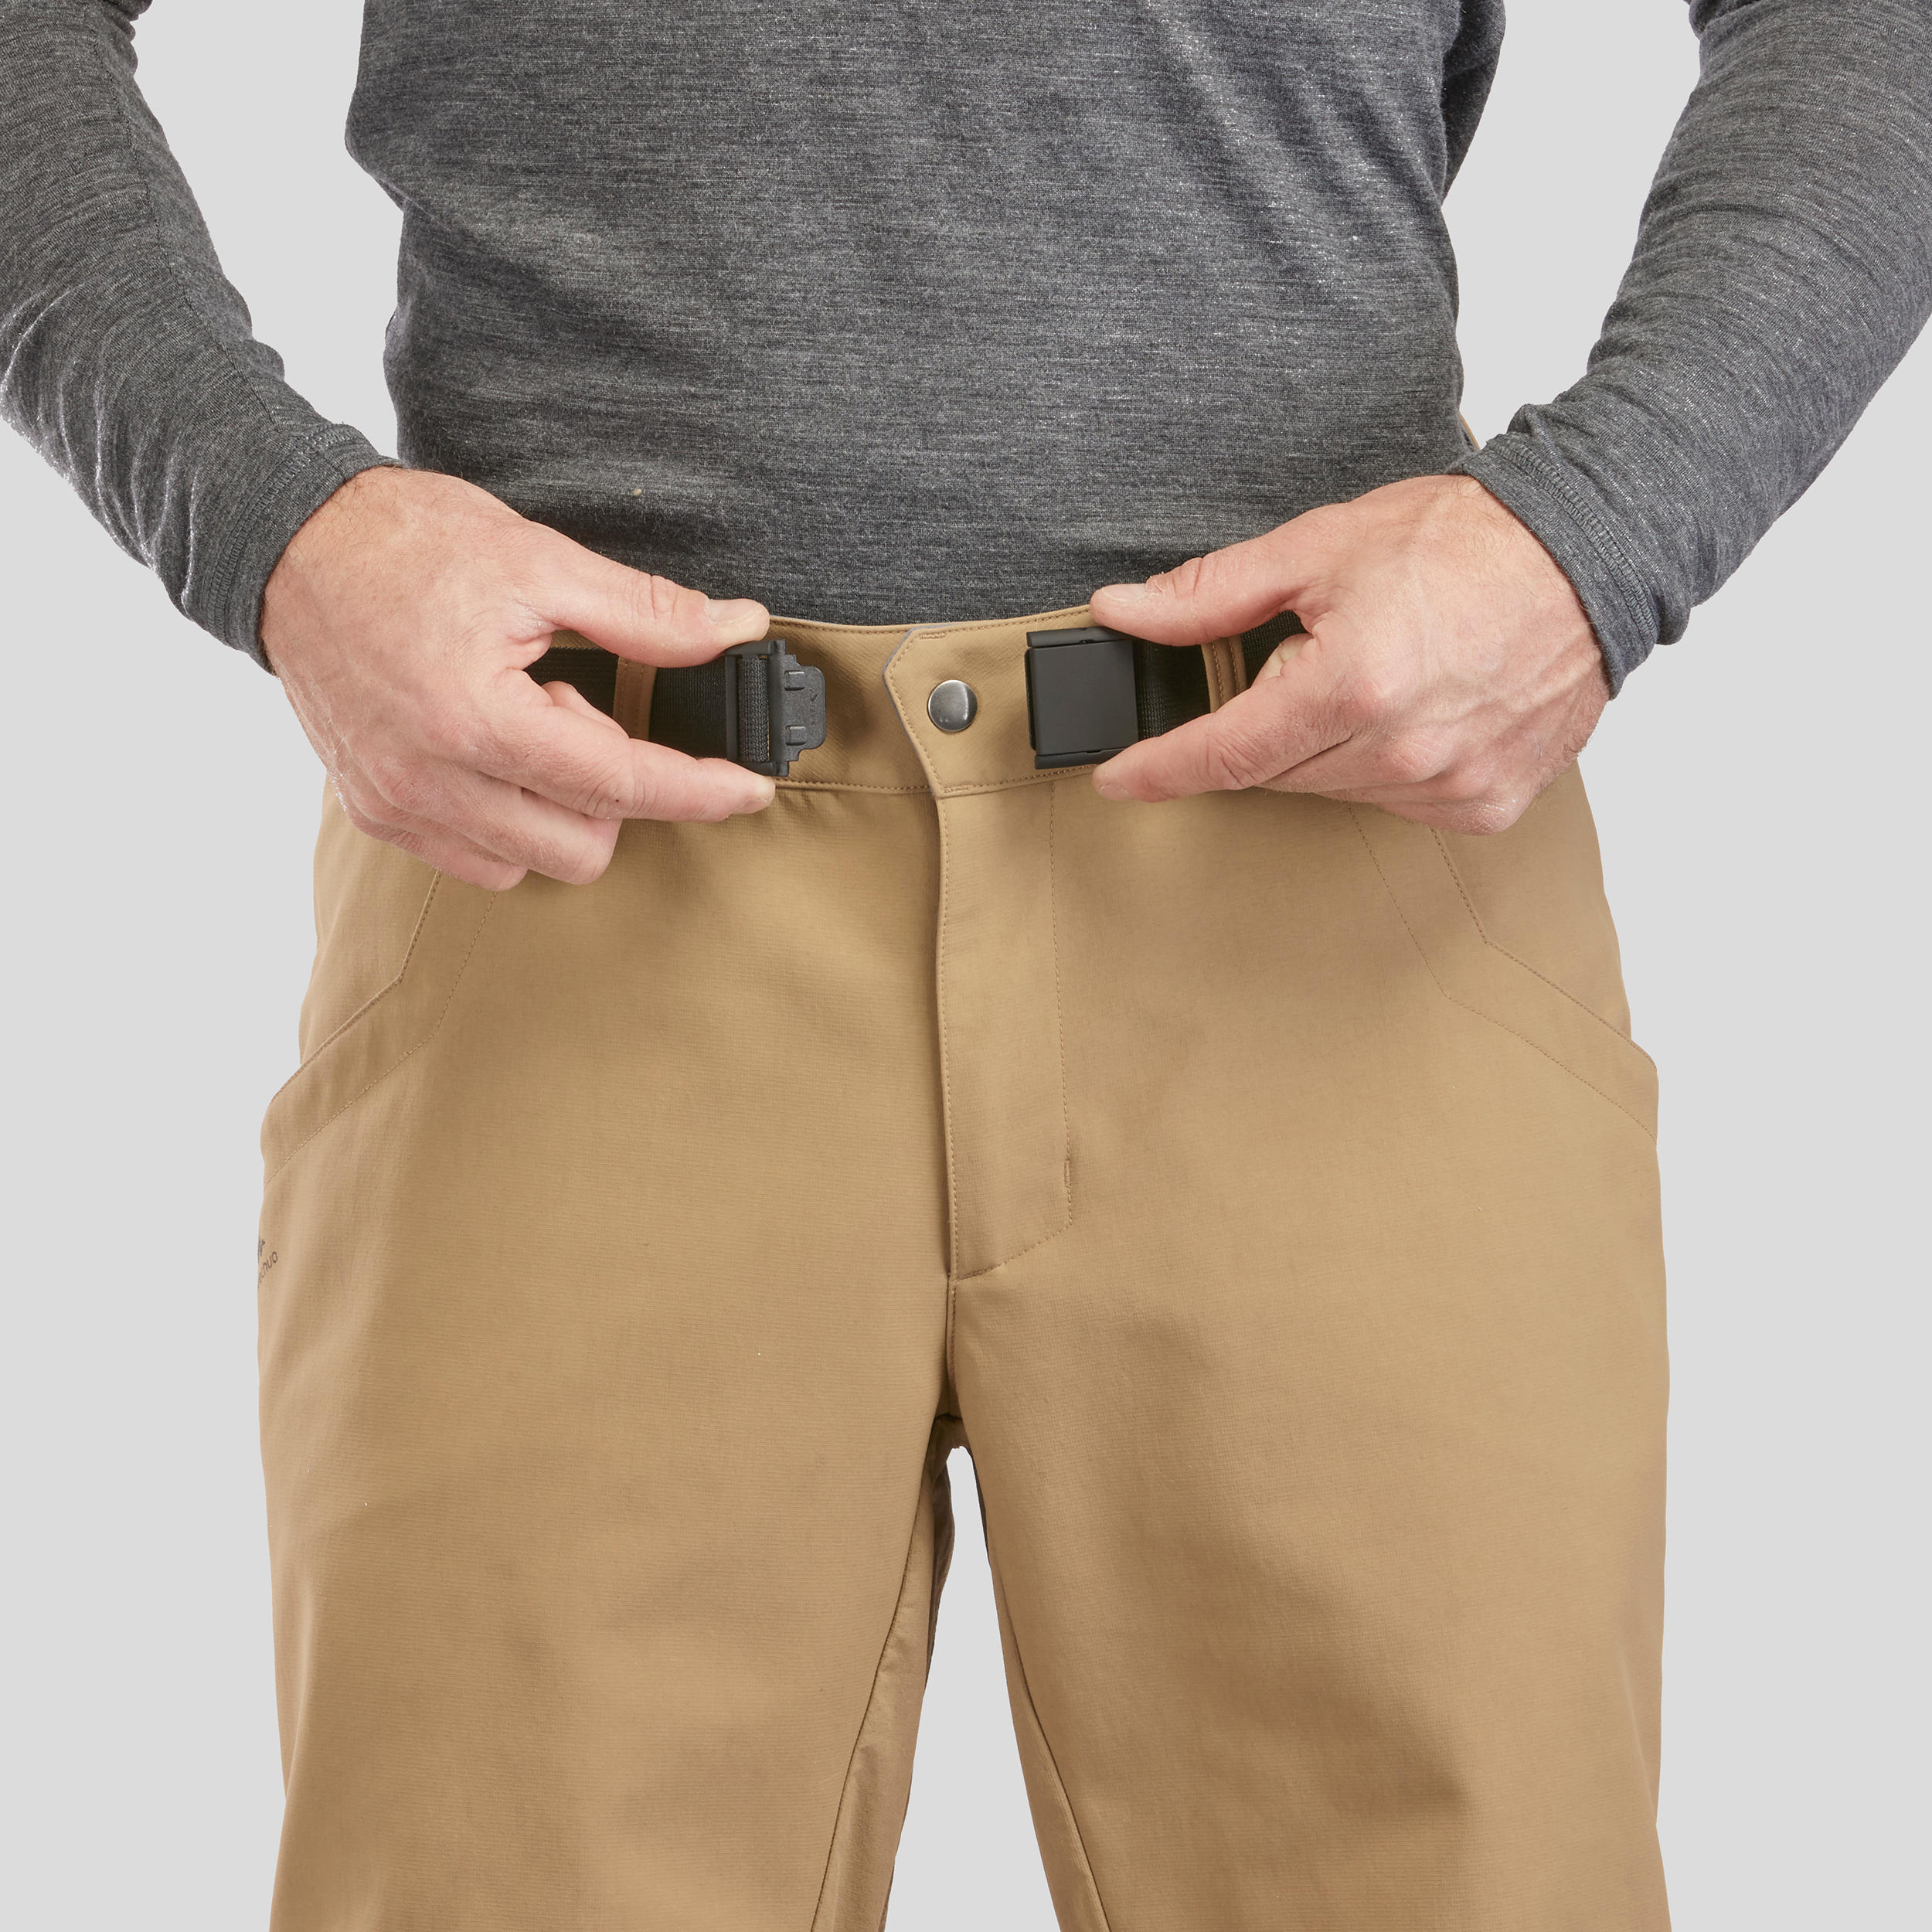 Pantalon chaud homme – SH 500 brun - QUECHUA